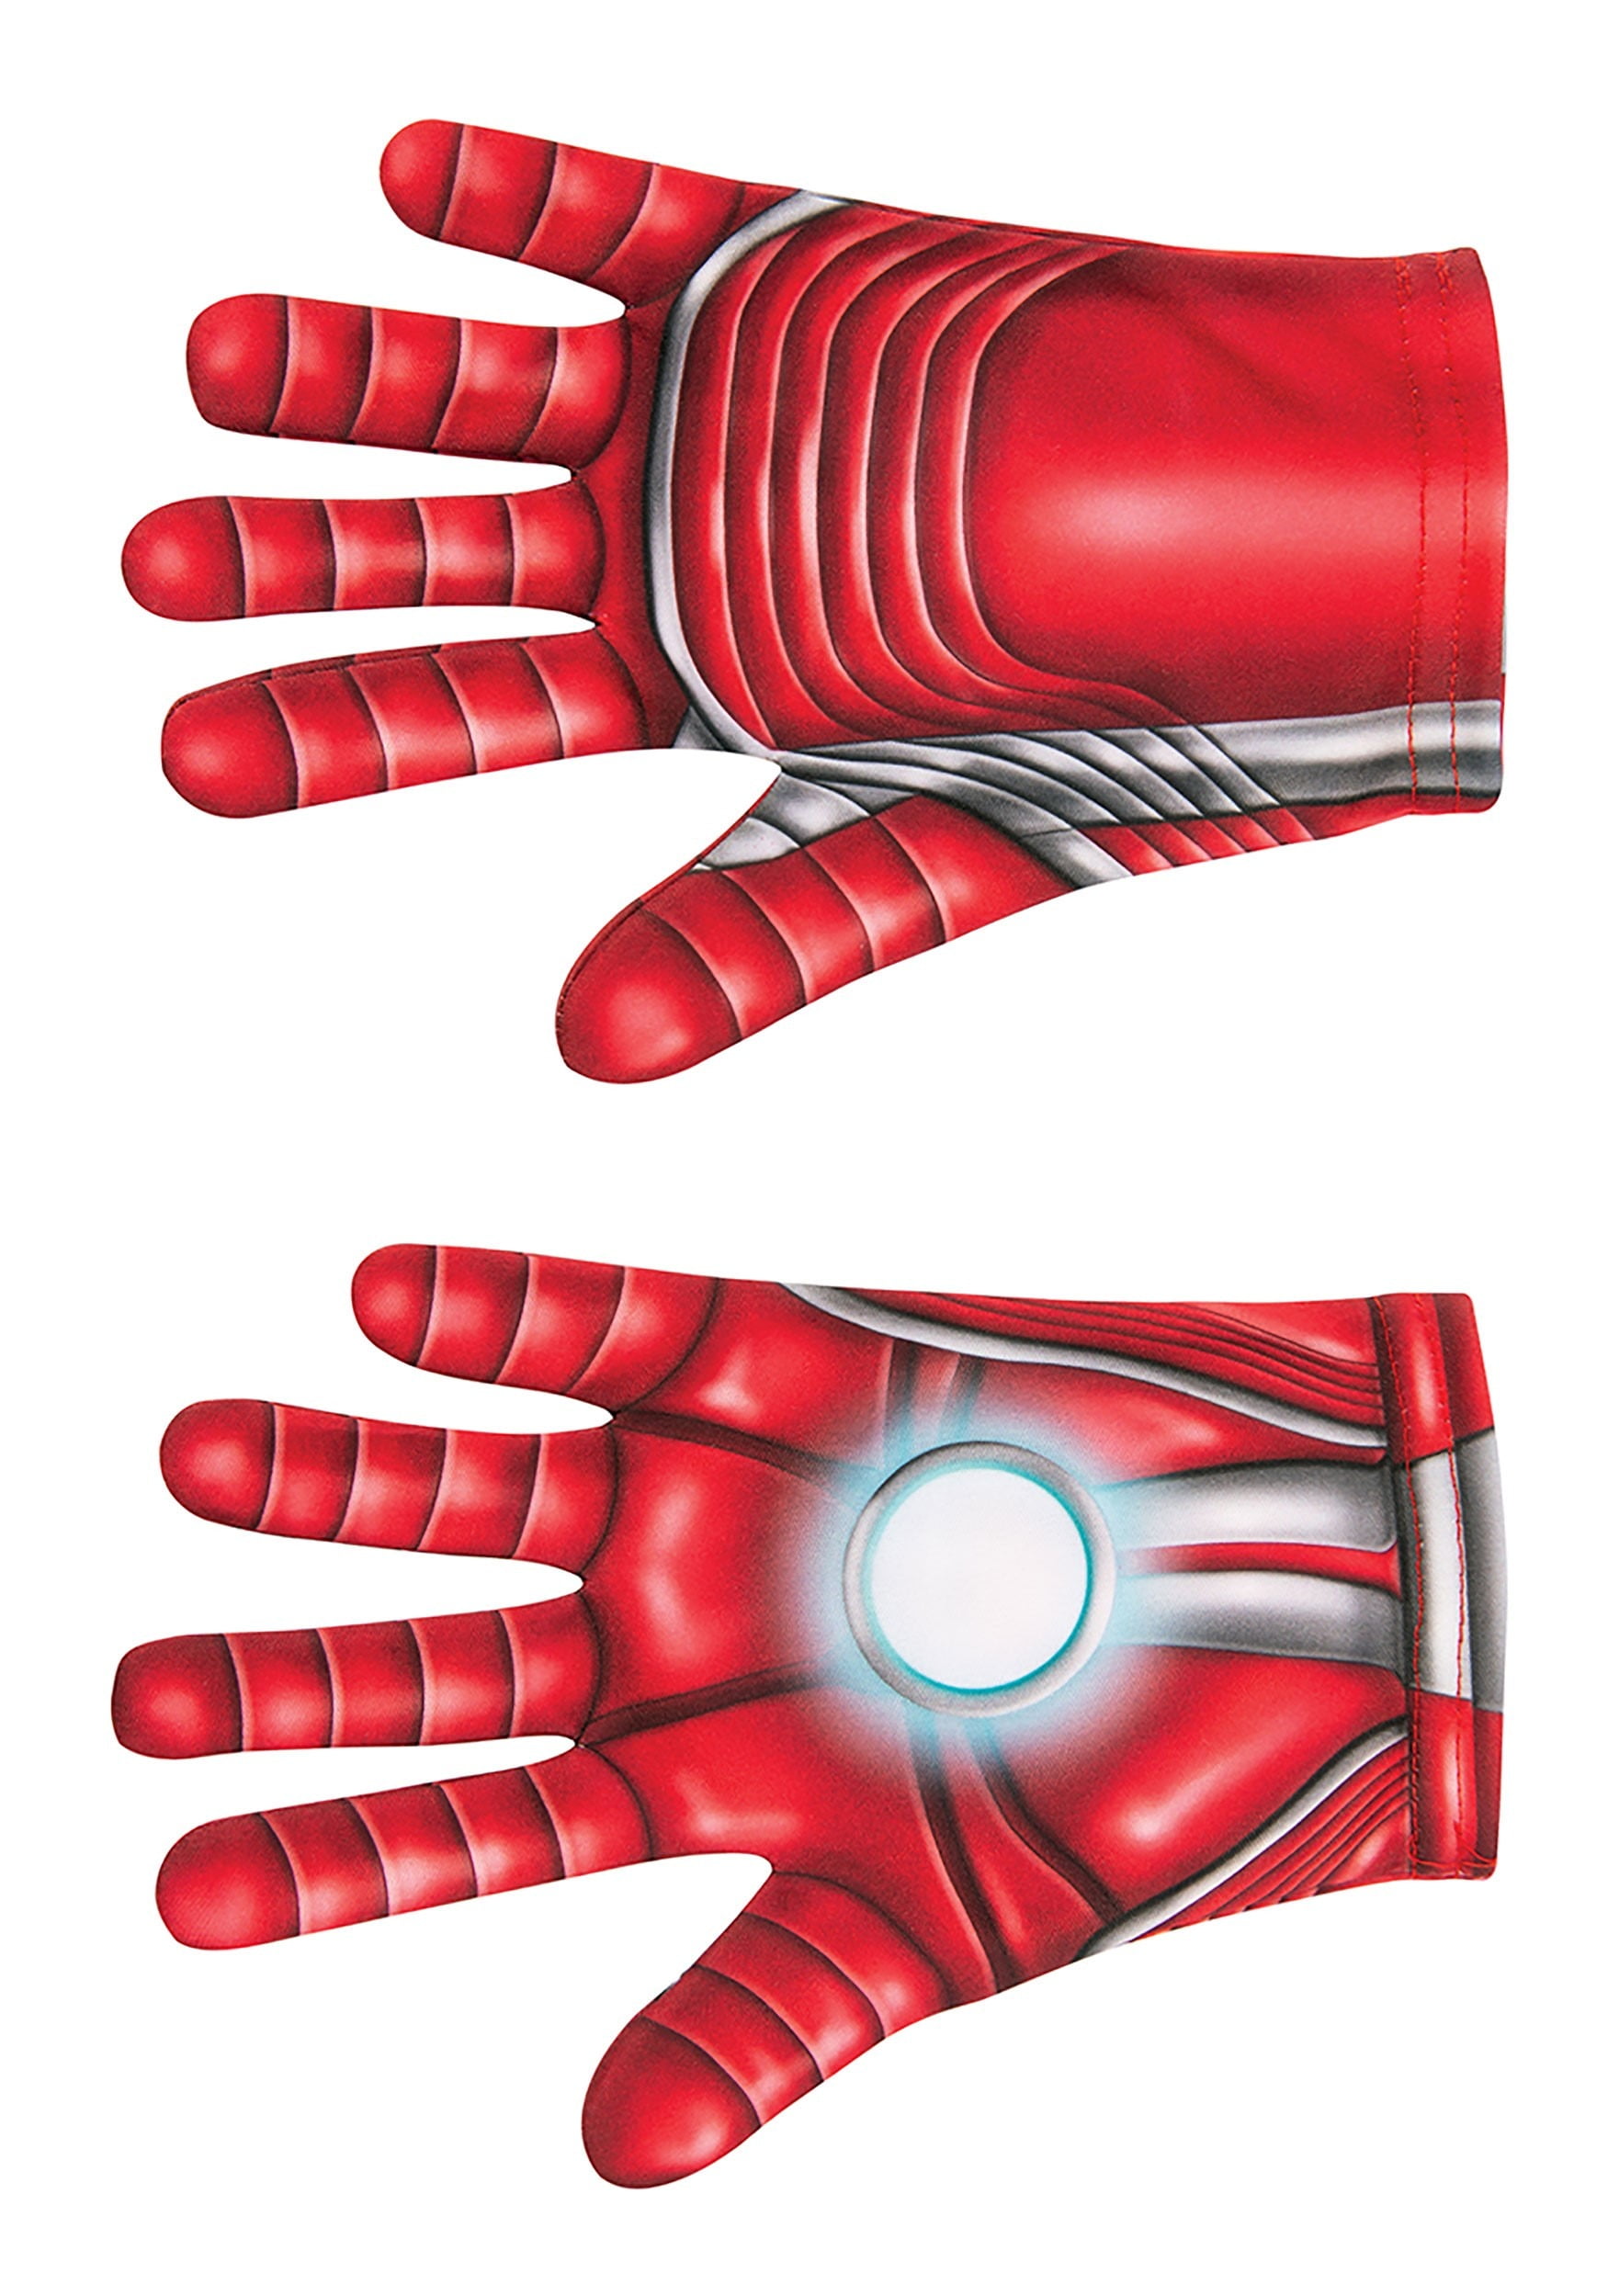 Child Size Rubies Marvel Avengers Assemble Iron Man Gloves